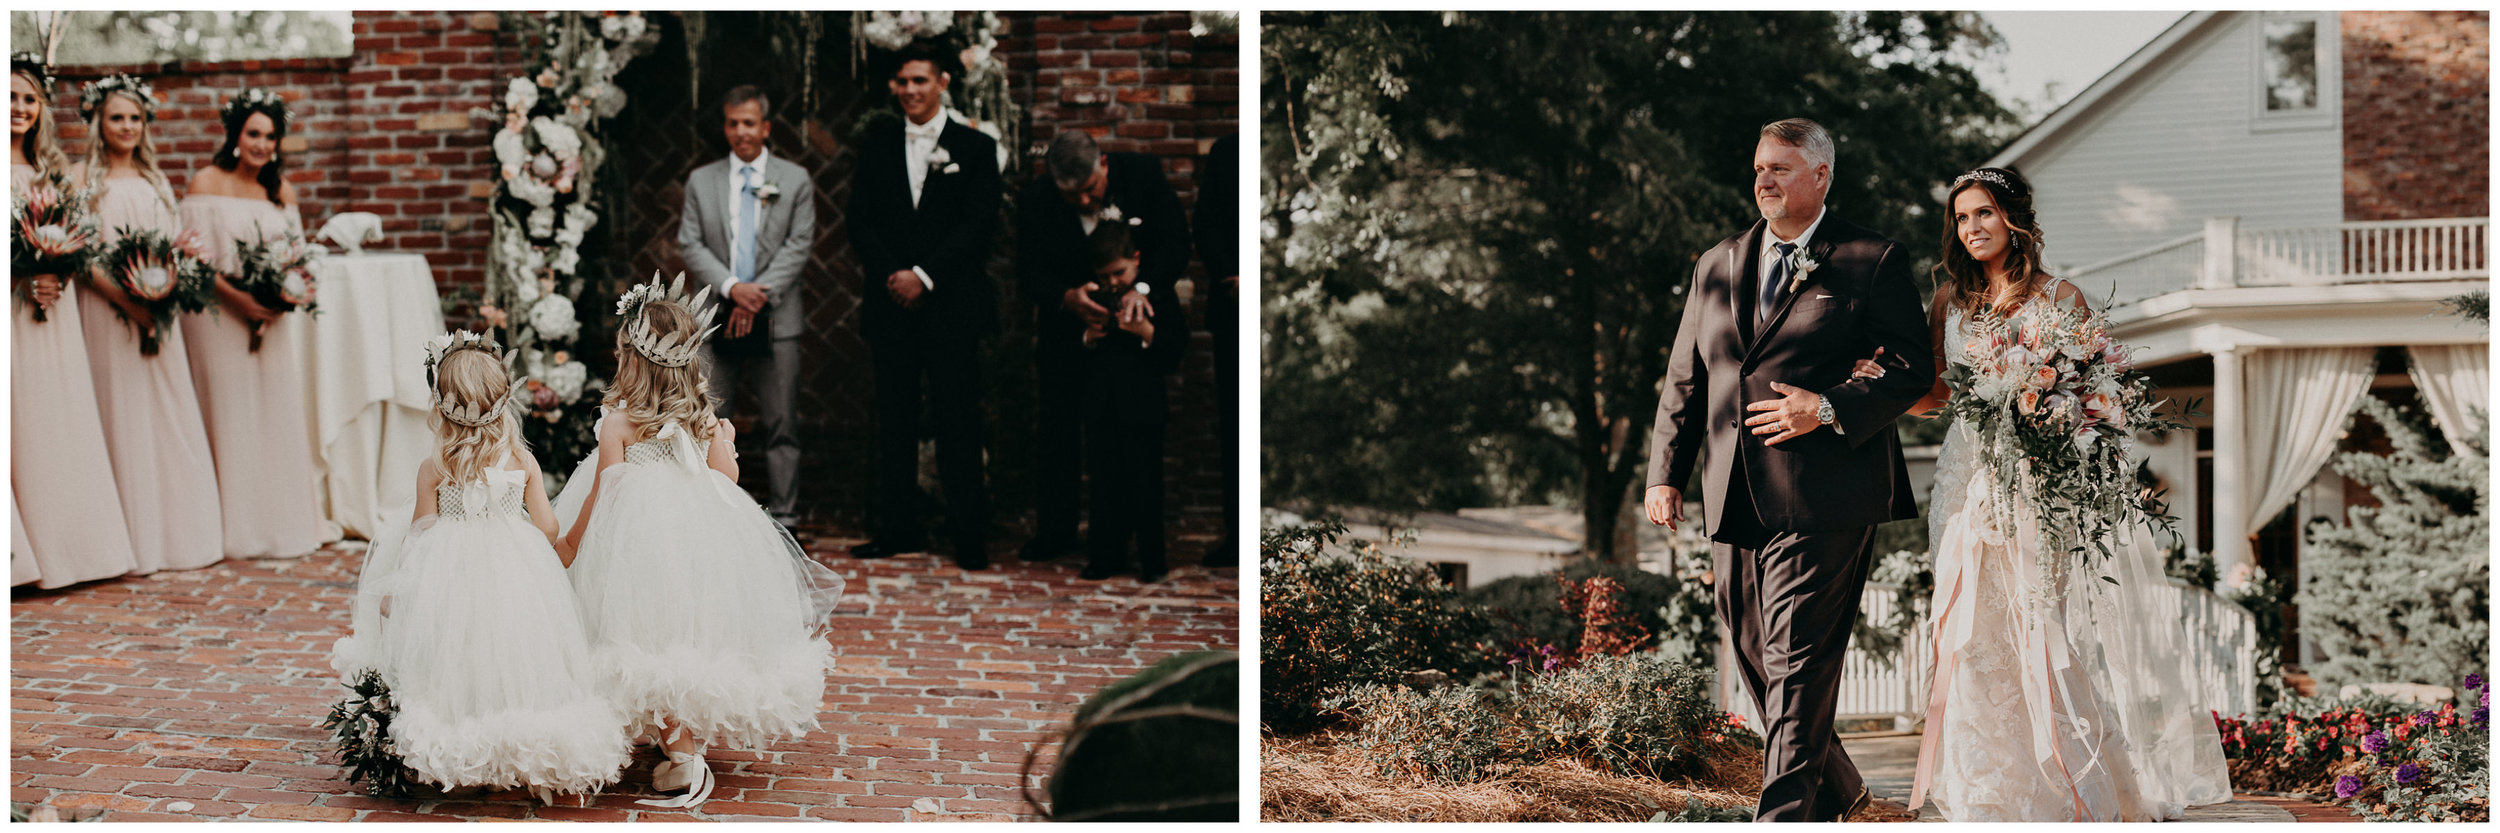 67Carl House Wedding Venue Ga, Atlanta Wedding Photographer - Boho, Bohemian, Junebug Weddings, Vintage, Retro, Trendy. Aline Marin Photography. .jpg